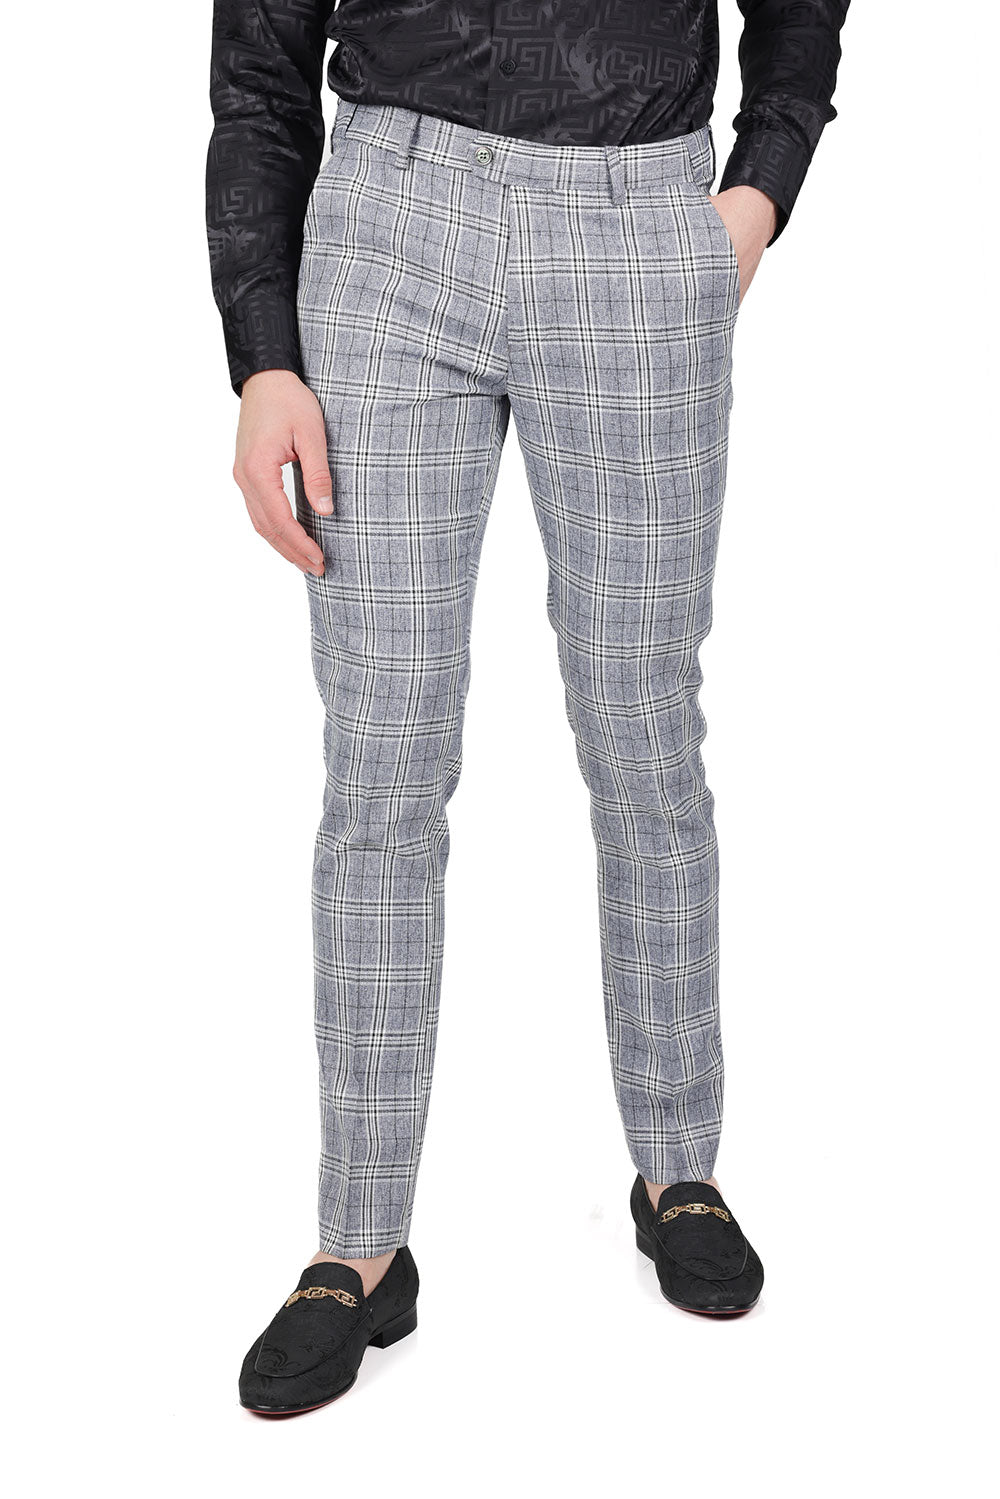 BARABAS men's checkered plaid grey white luxury chino pants CP47